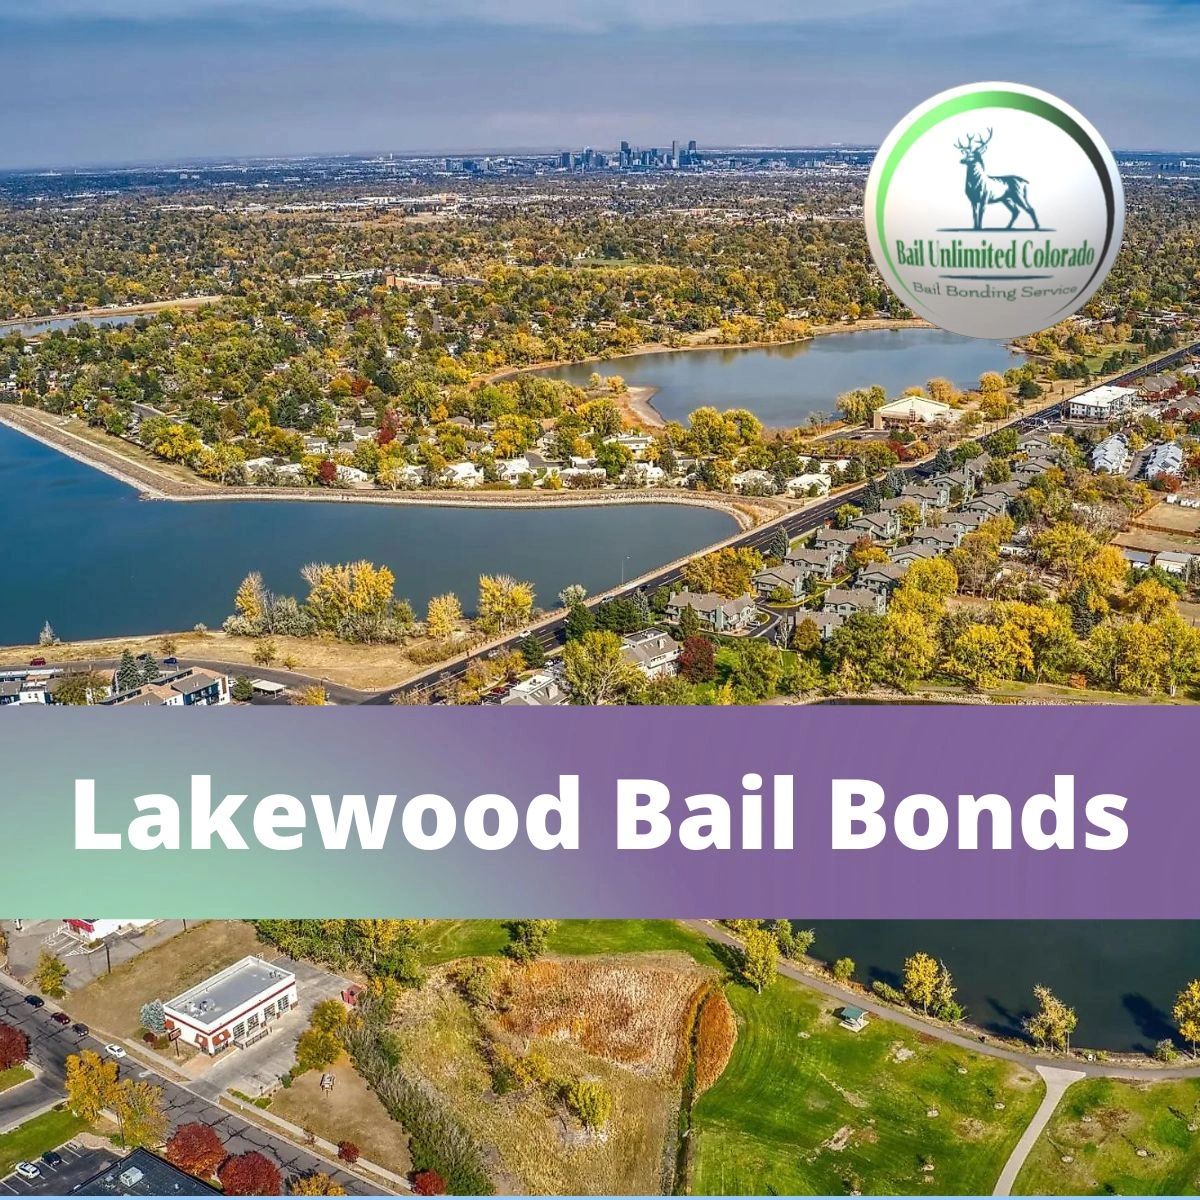 Lakewood CO Bail Bonds LOGO Bail Unlimited Colorado Bail Bonding Service IMAGE Lakewood City Jeffco